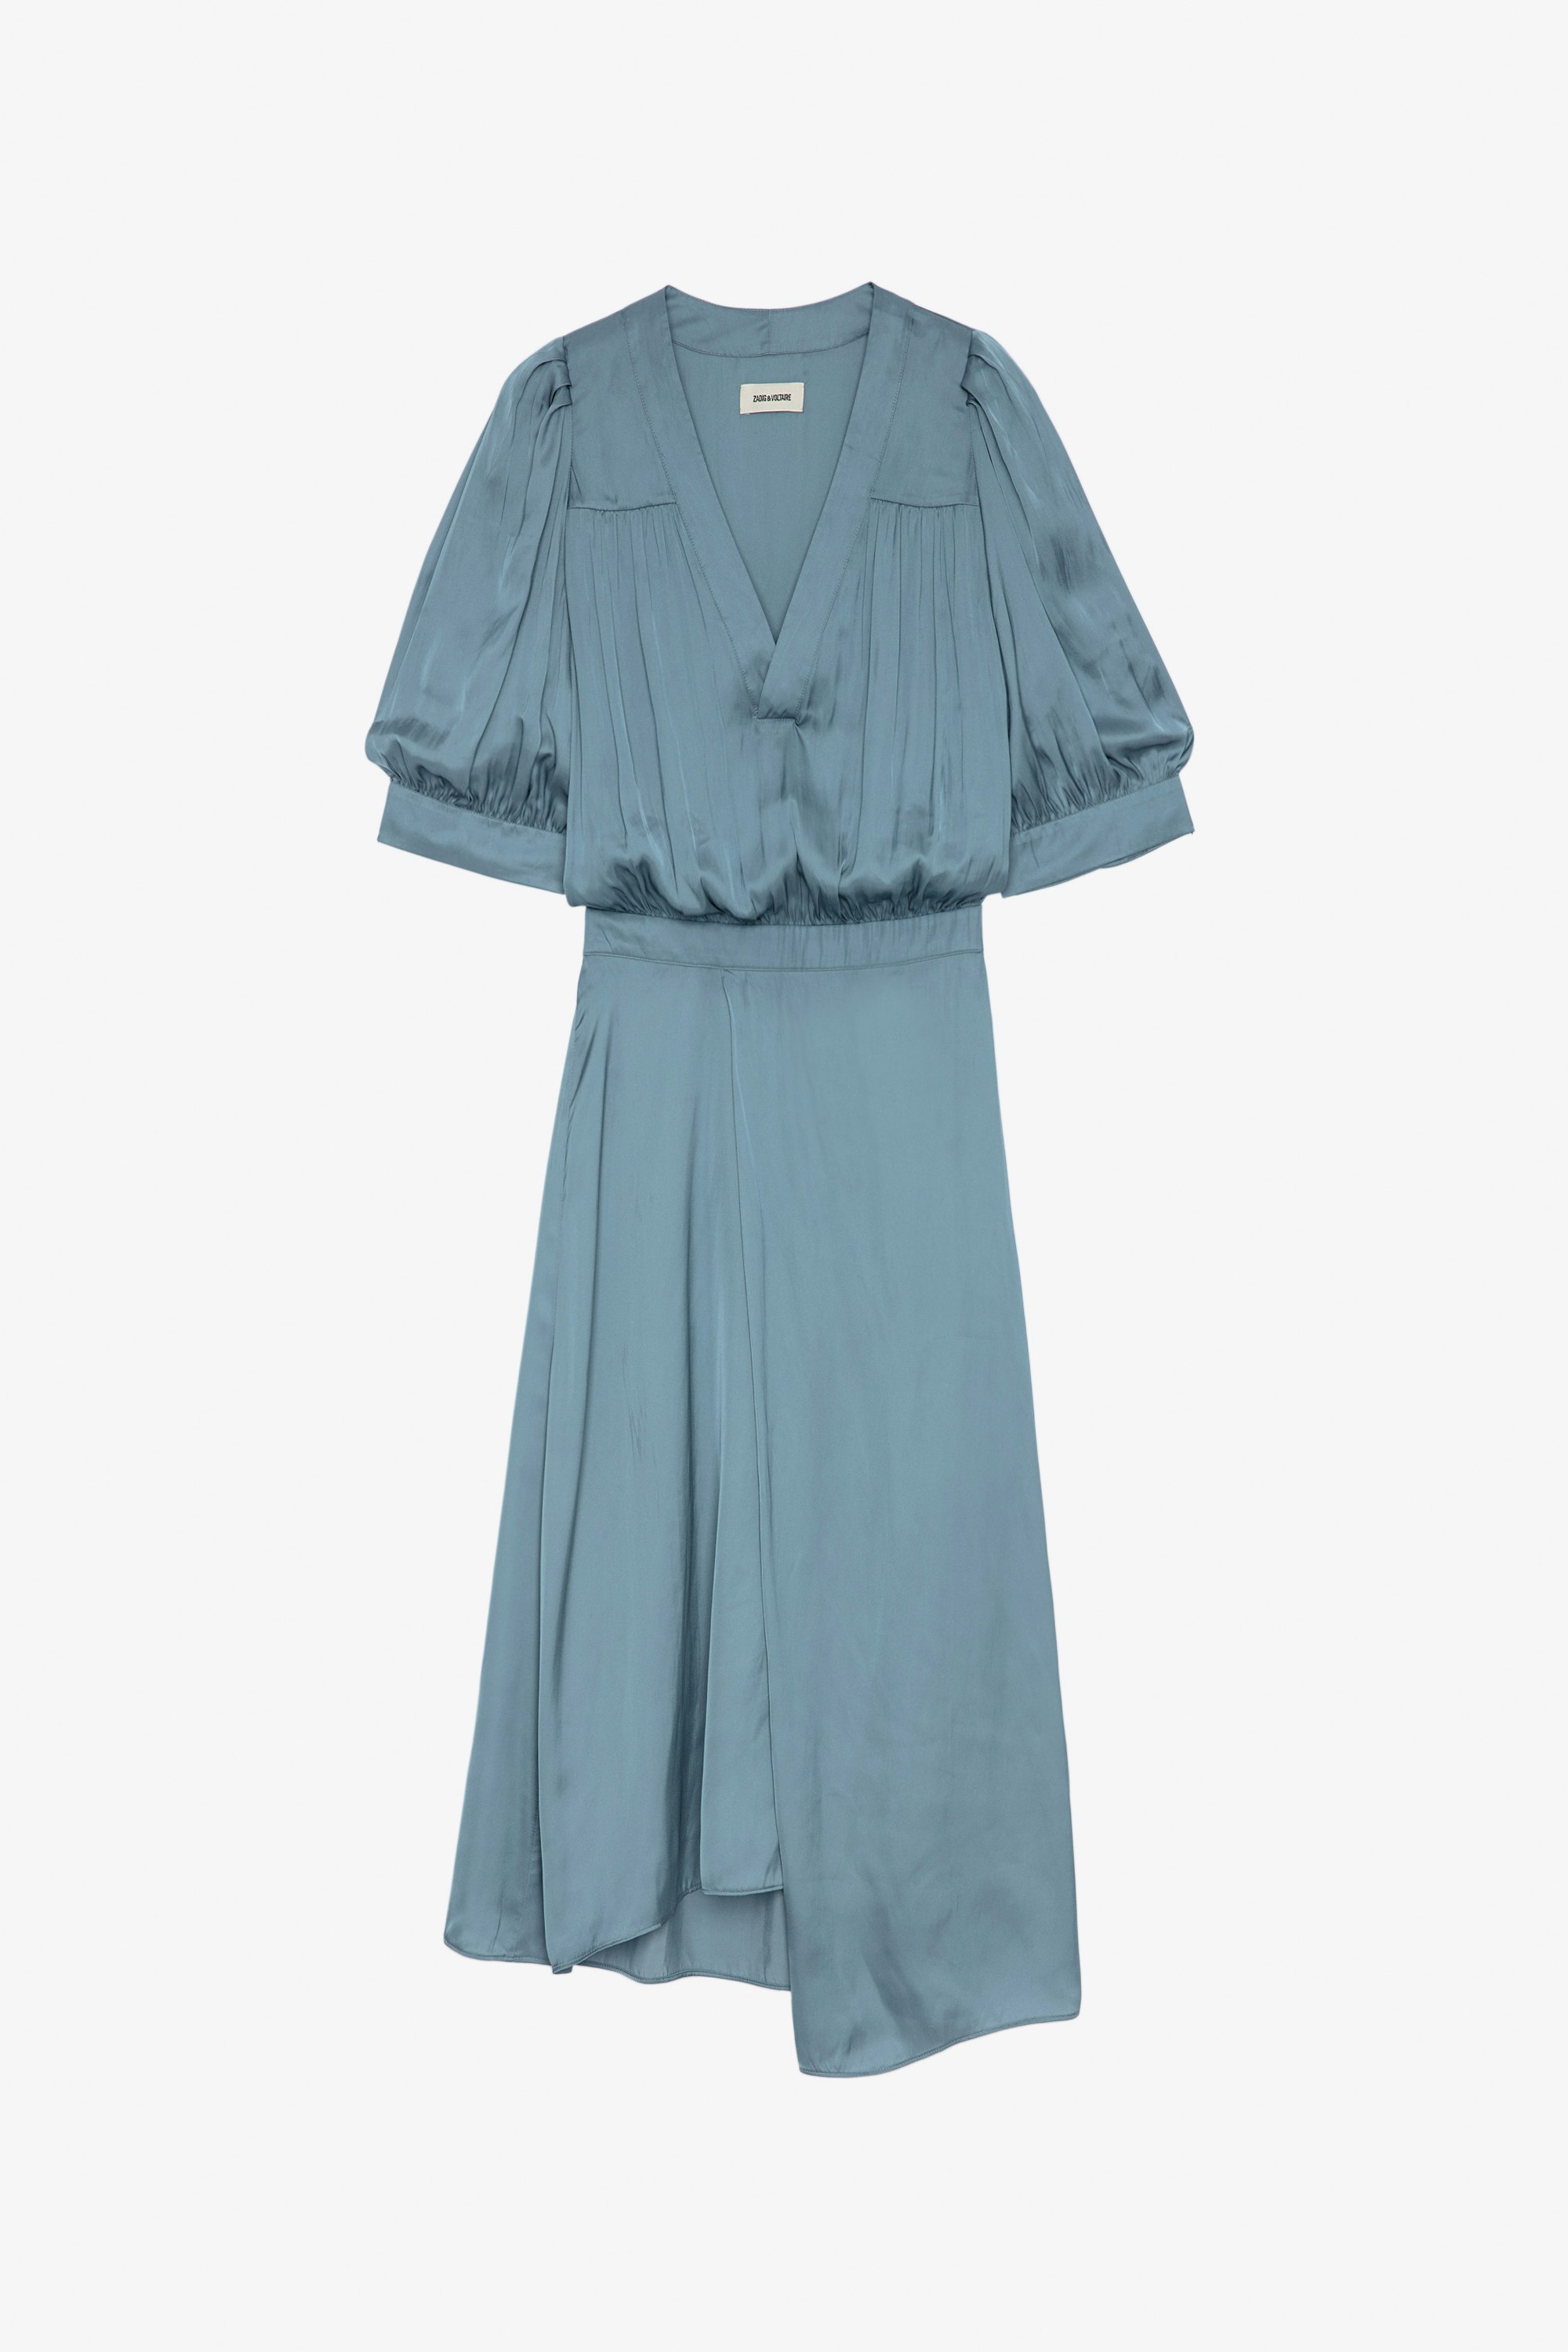 Ralia Dress Women's mid-length light blue satin dress with short puff sleeves